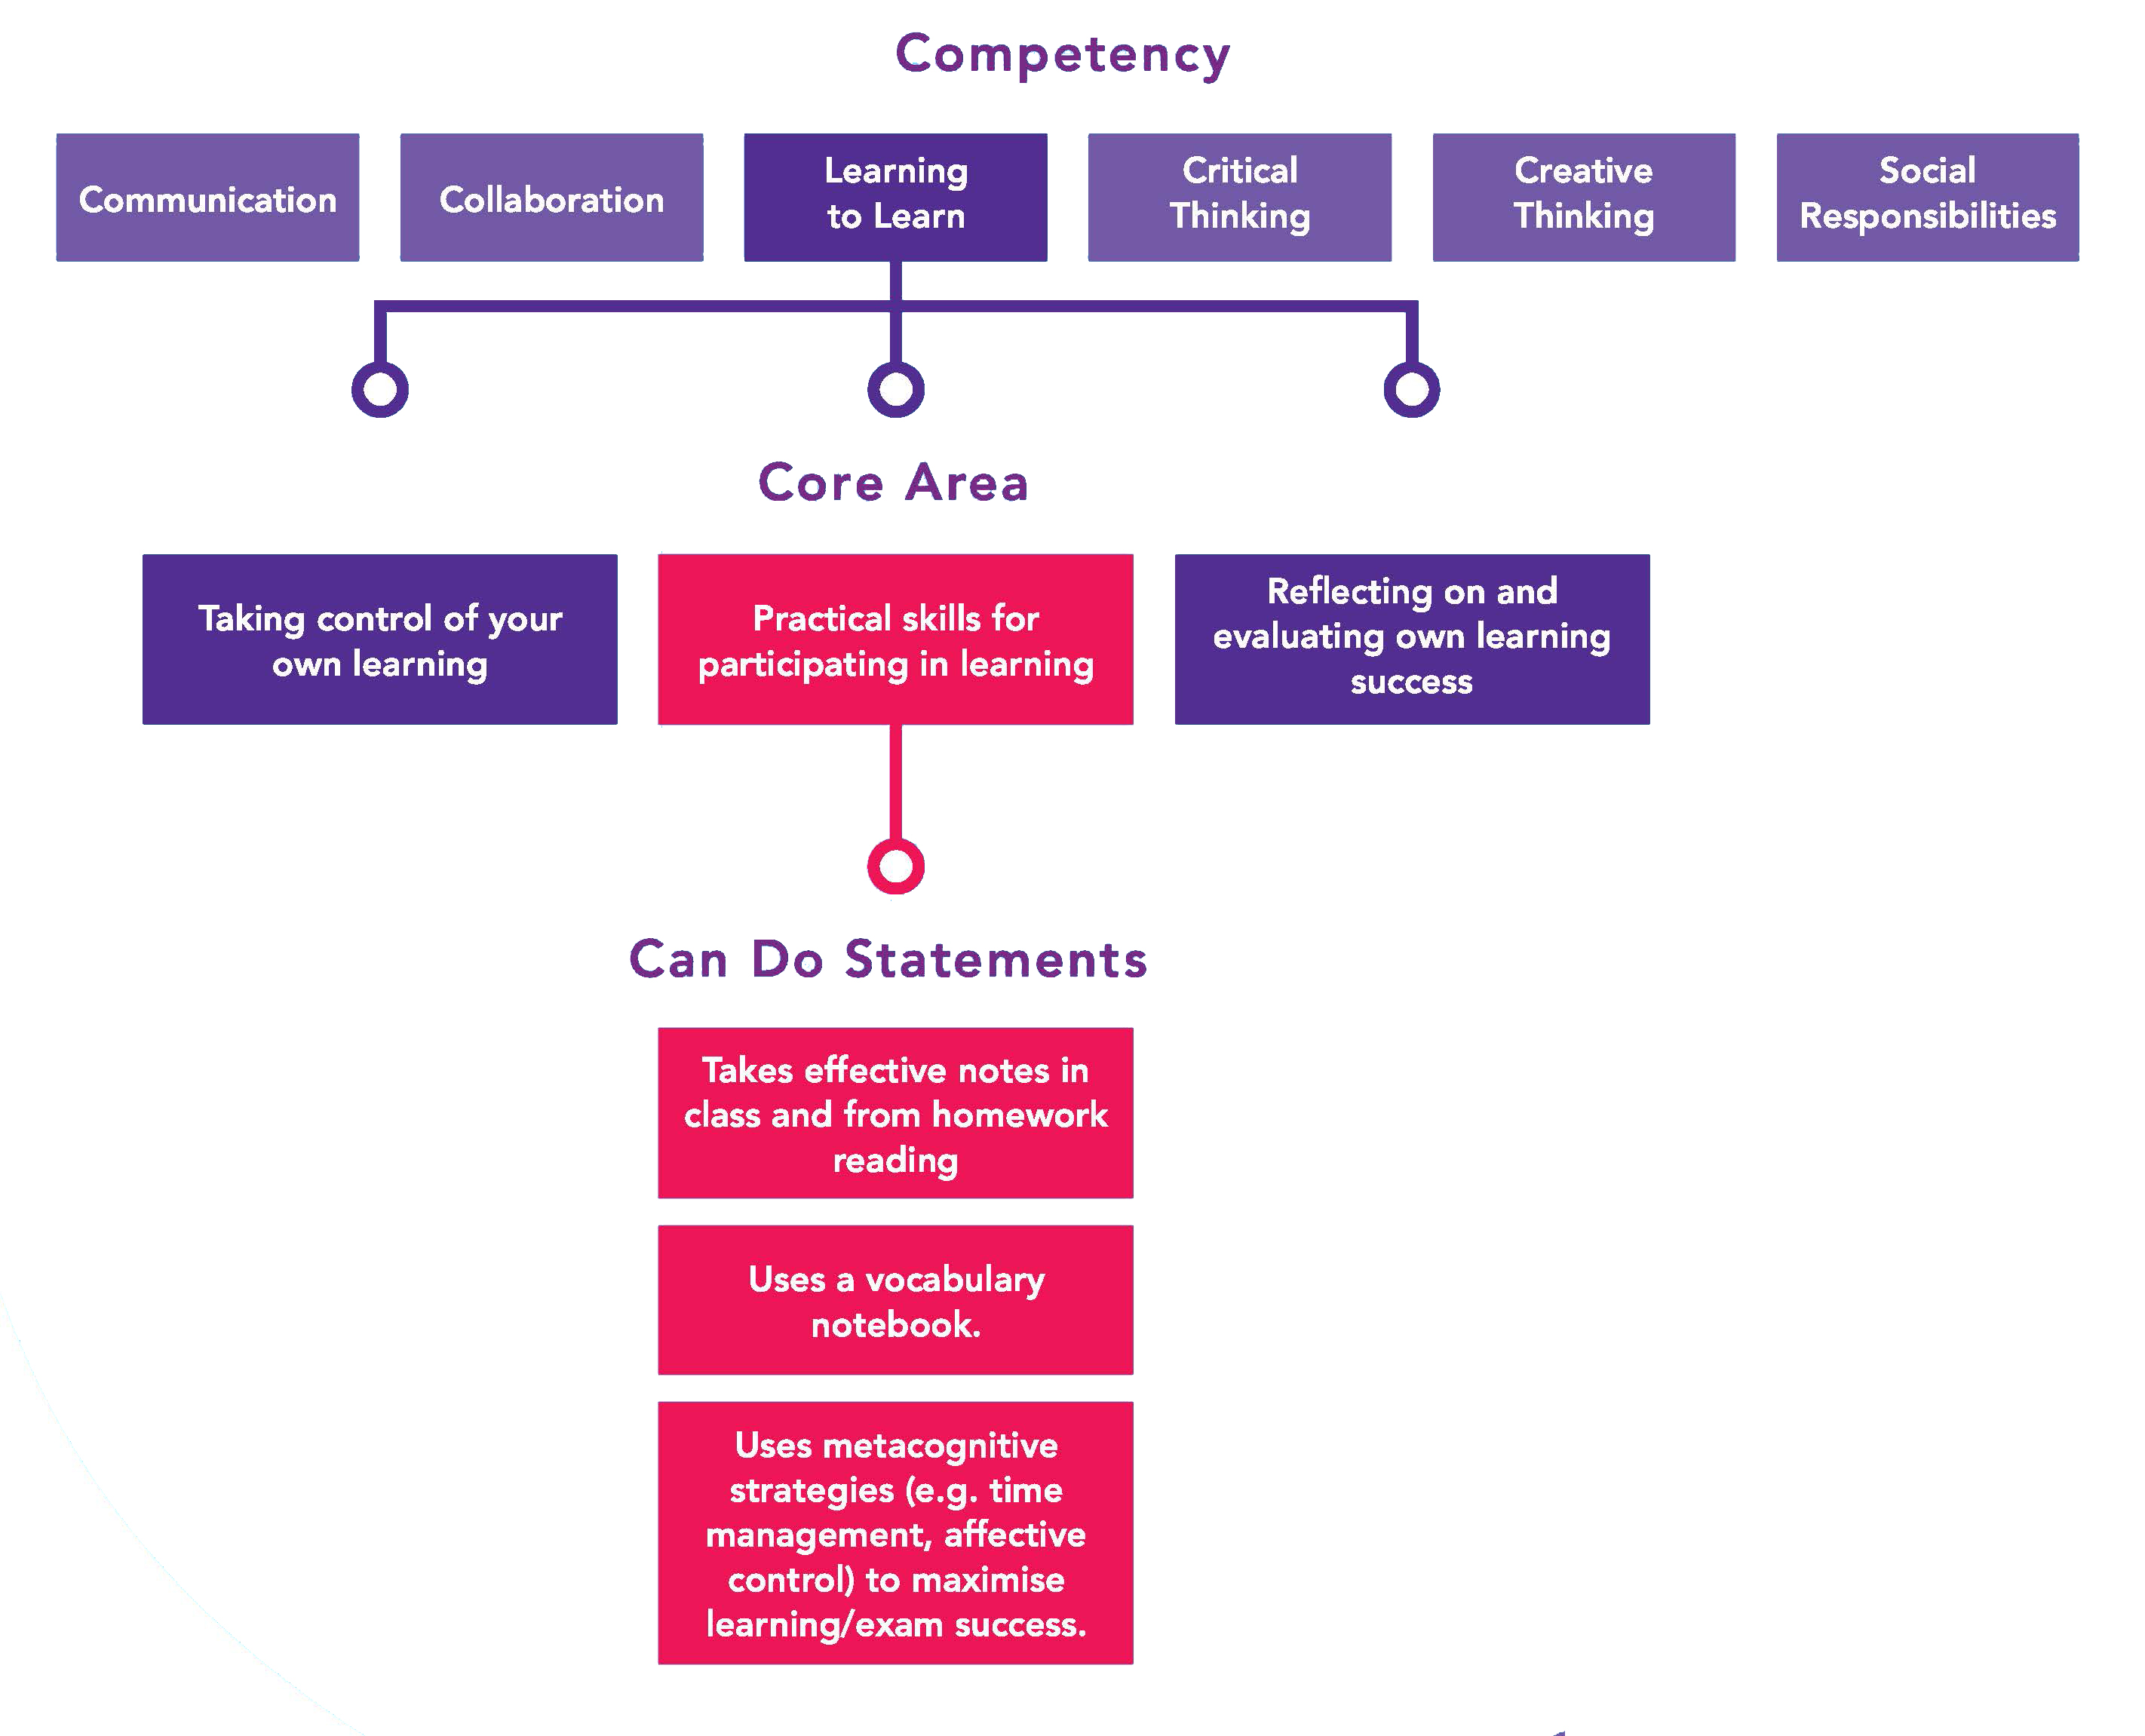 Life competencies framework